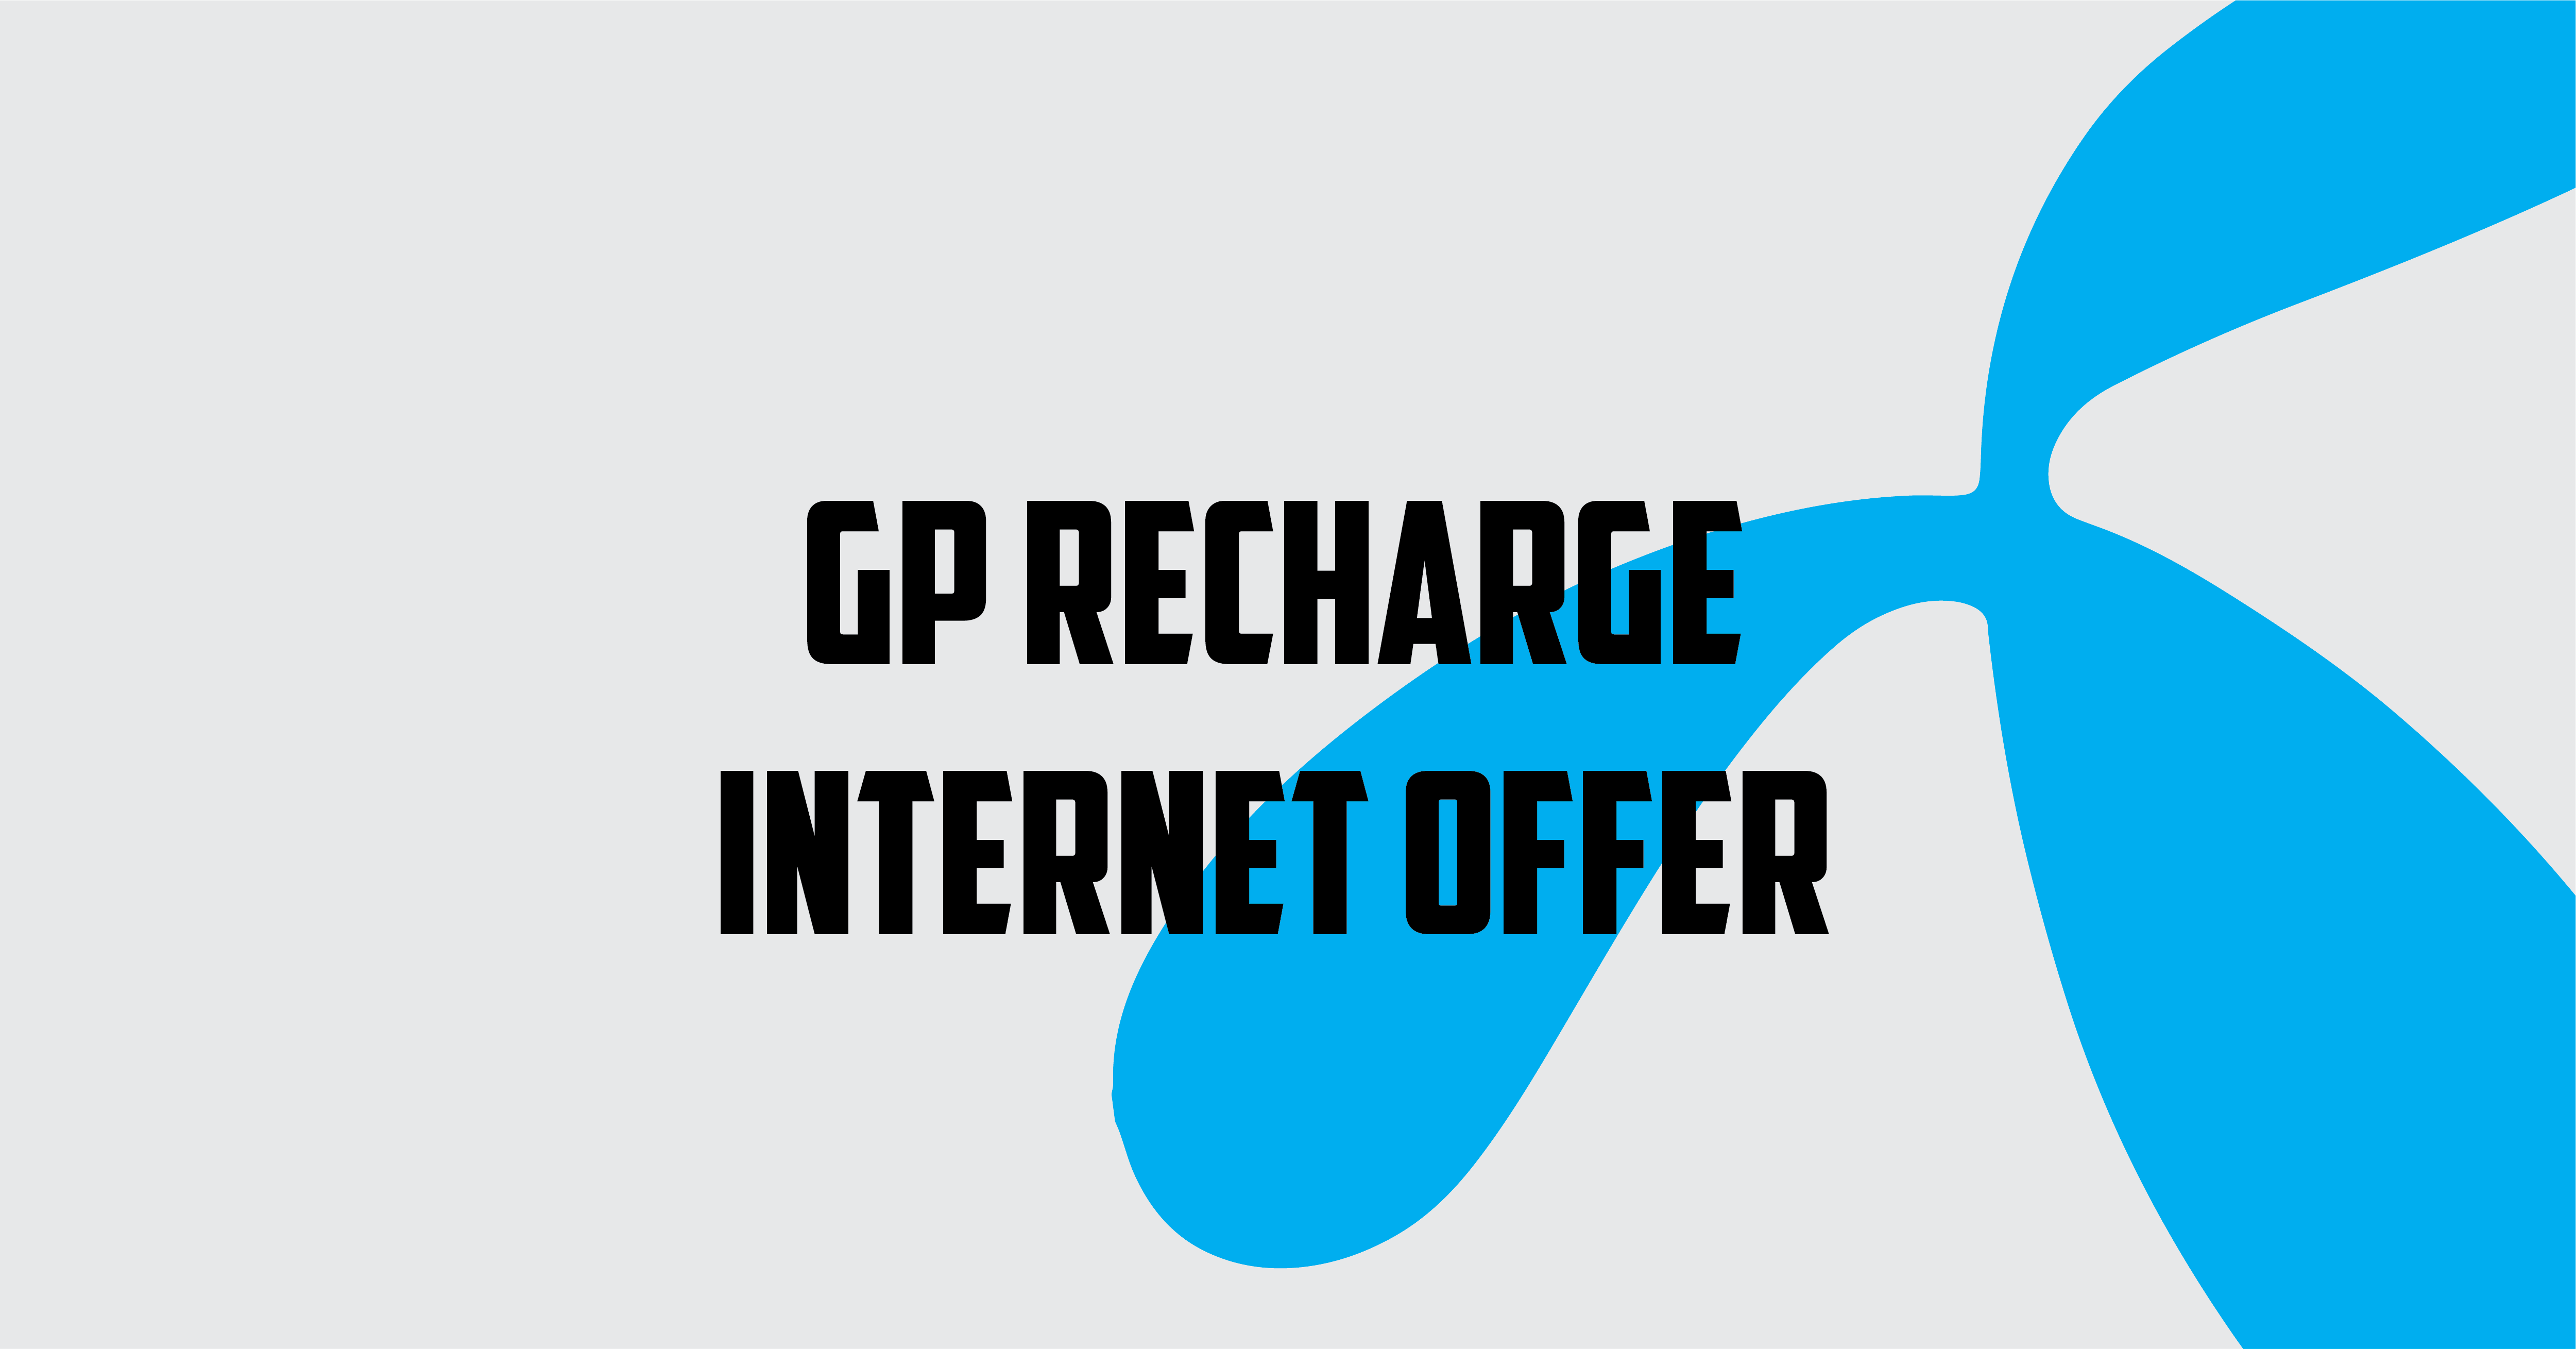 GP Recharge Internet Offer